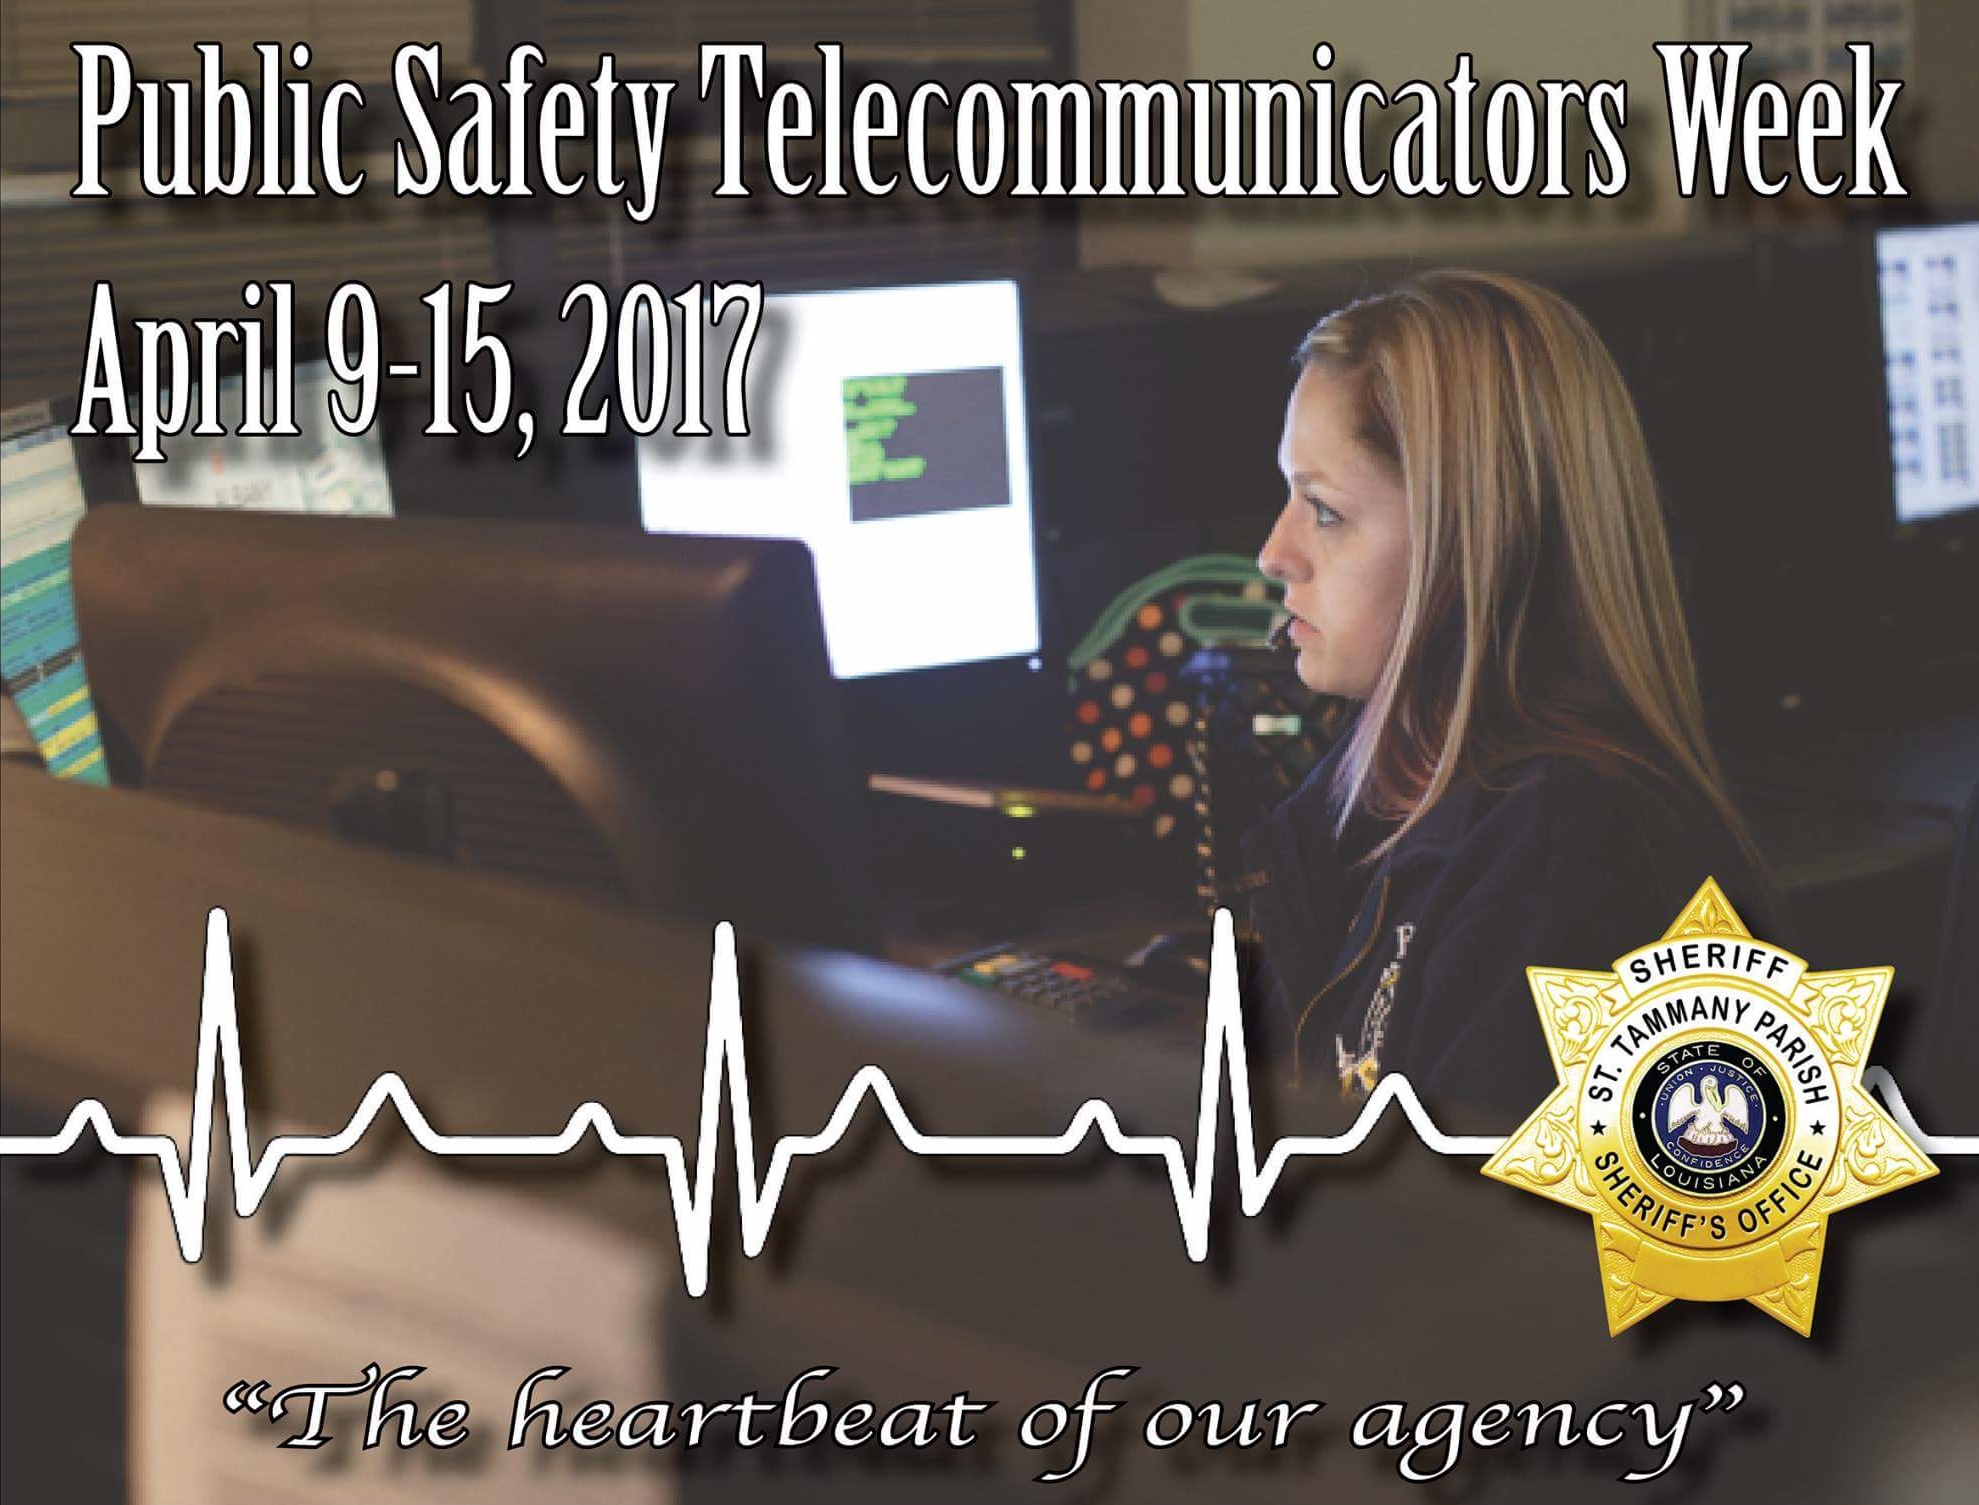 STPSO Announces Public Safety Telecommunications Week